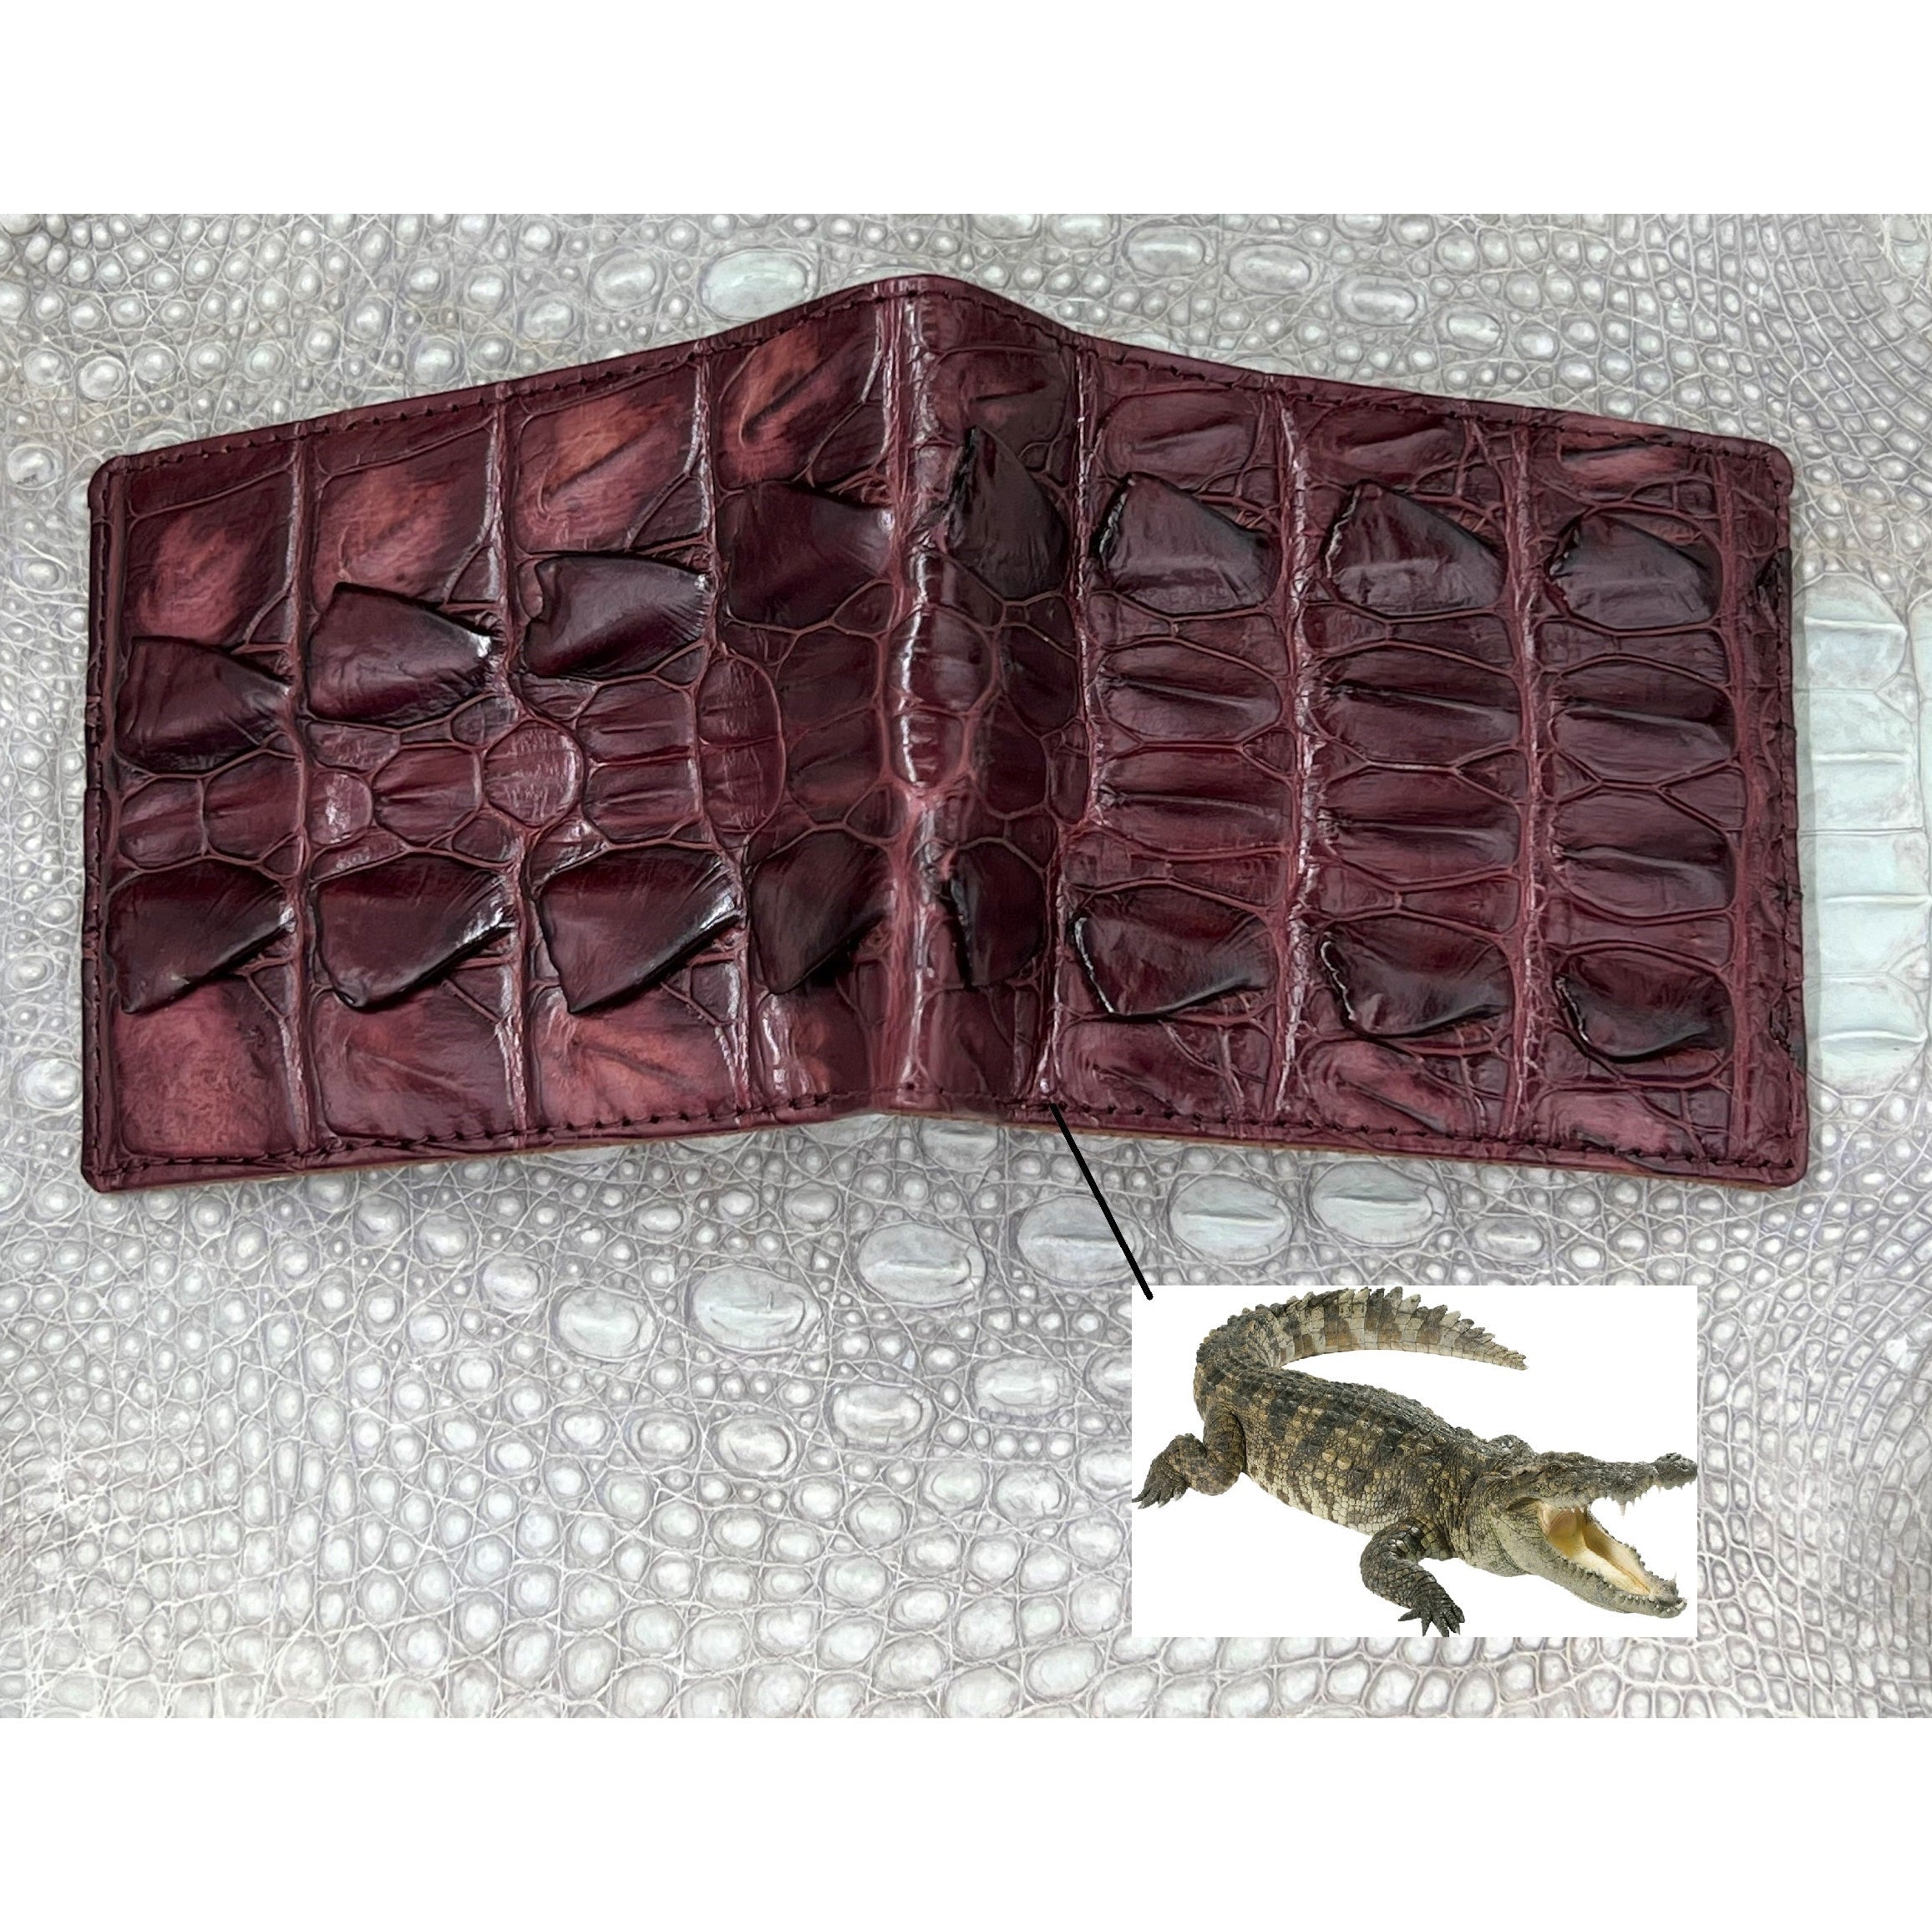 Red Burgundy Alligator Skin Bifold Wallet For Men | Handmade Crocodile Leather Wallet RFID Blocking | VL5521 - Vinacreations